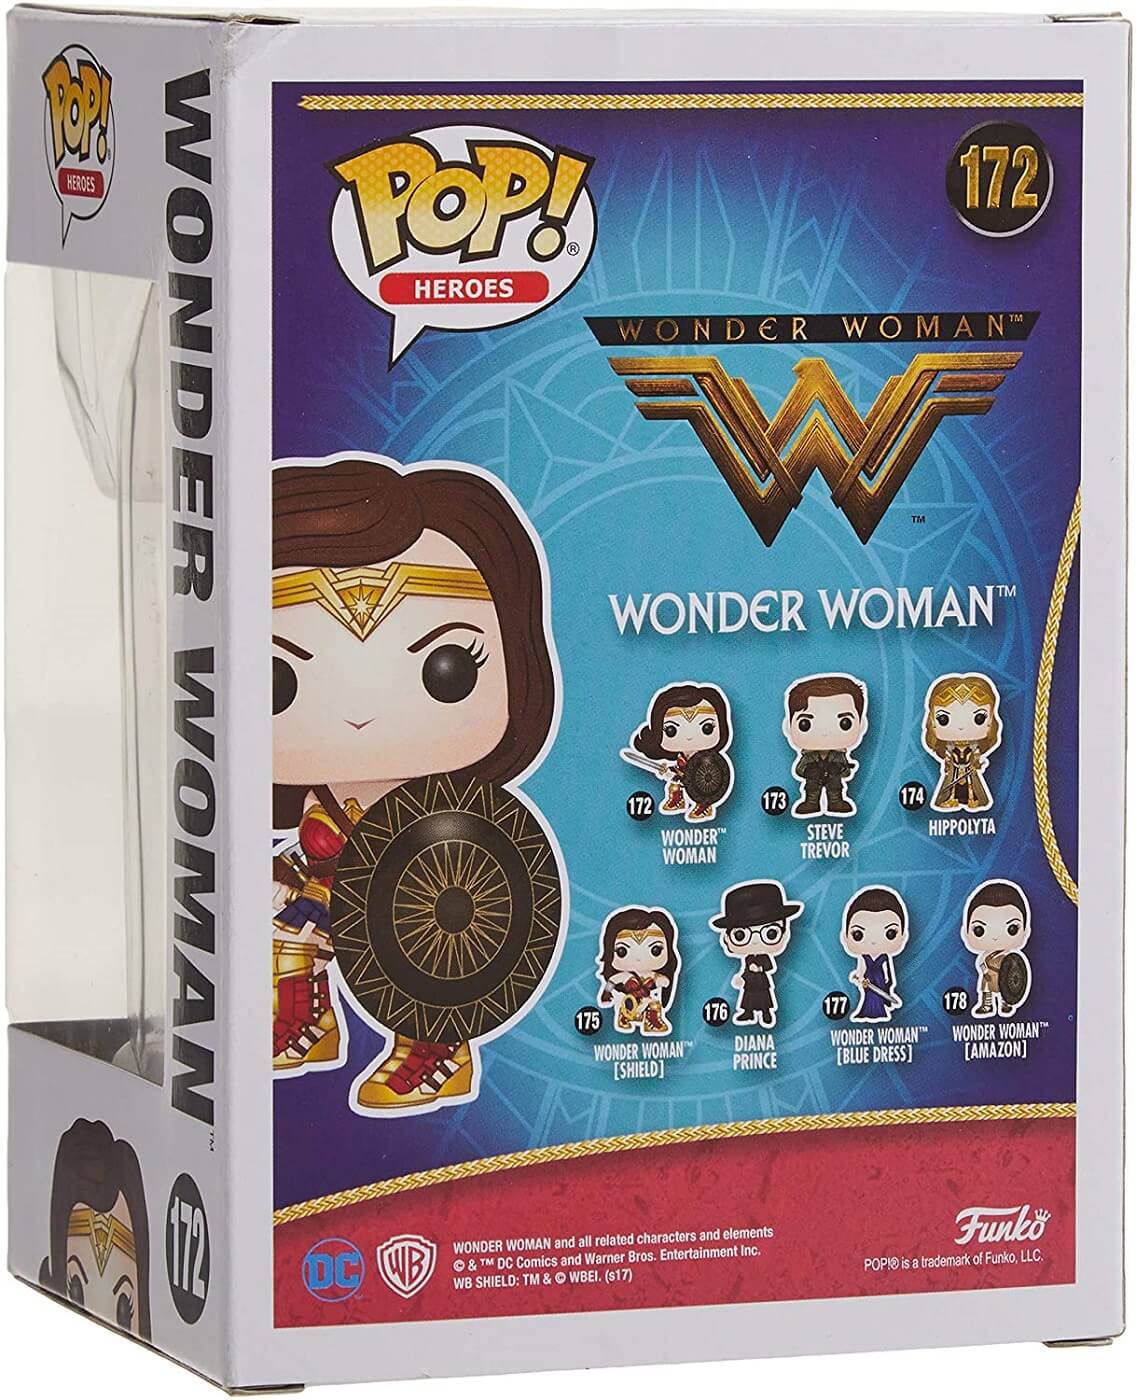 Wonder Woman con Espada 172 ( Funko 12545 ) imagen c